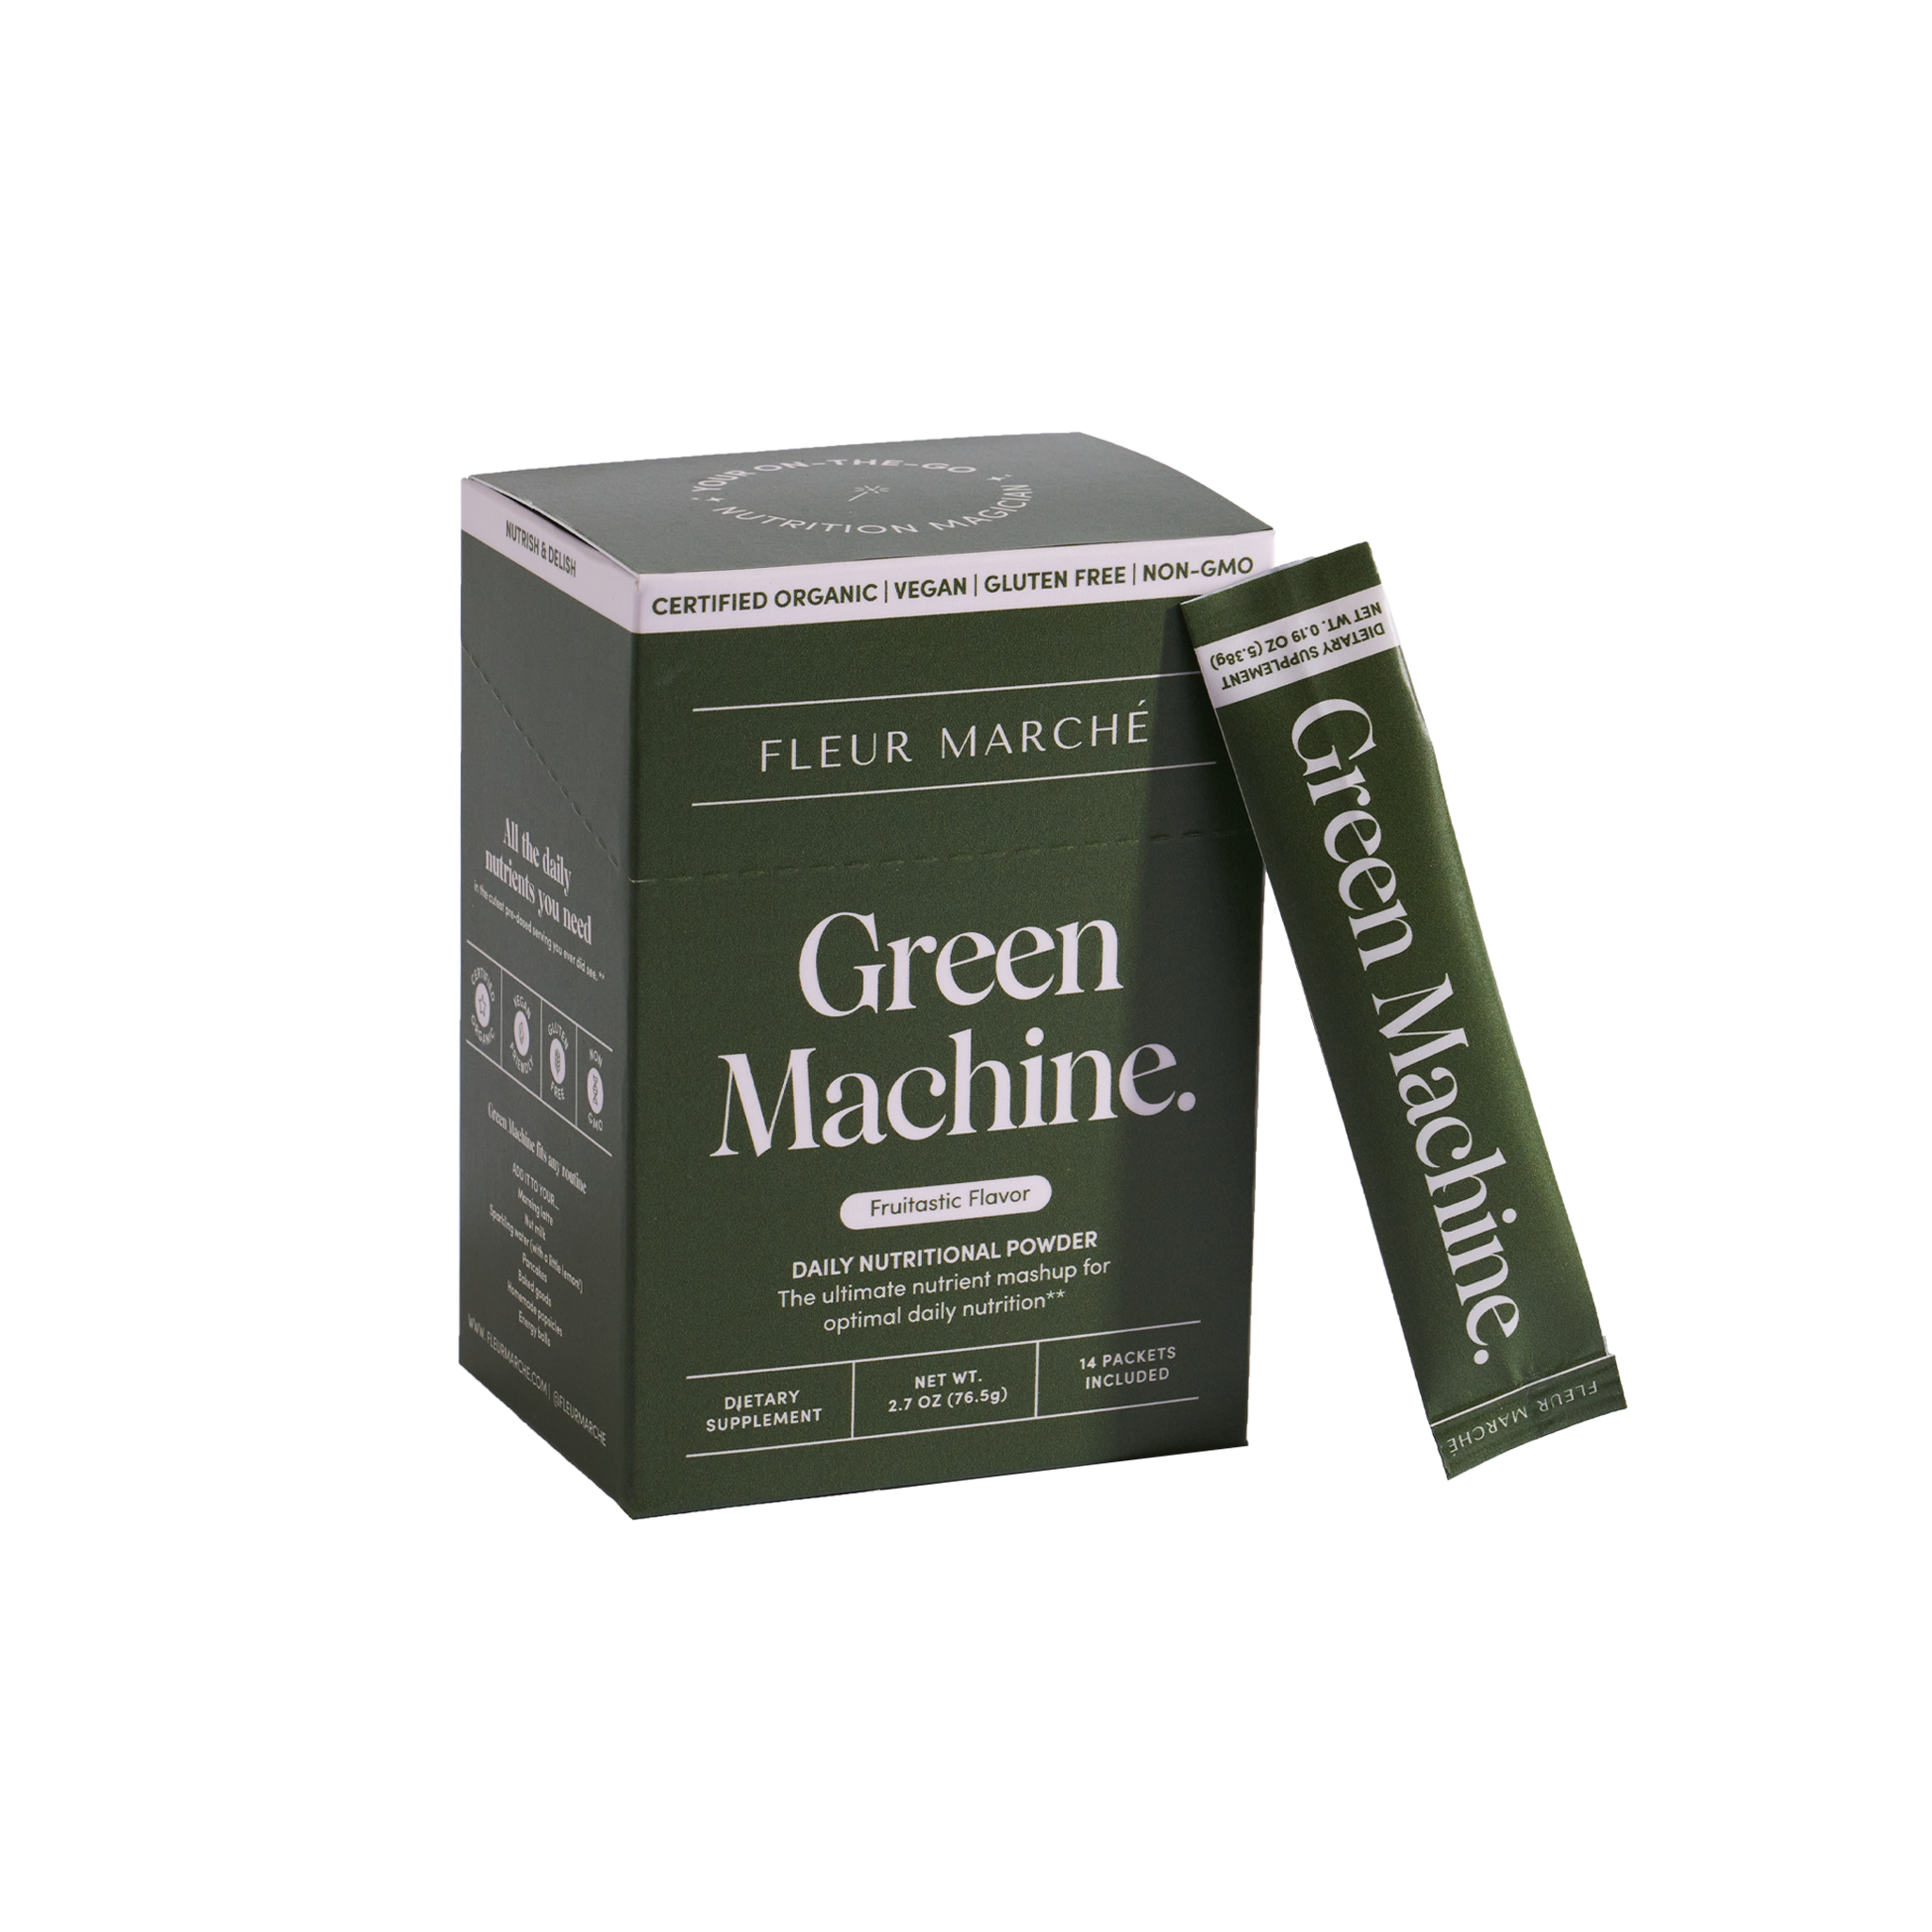 Green Machine.